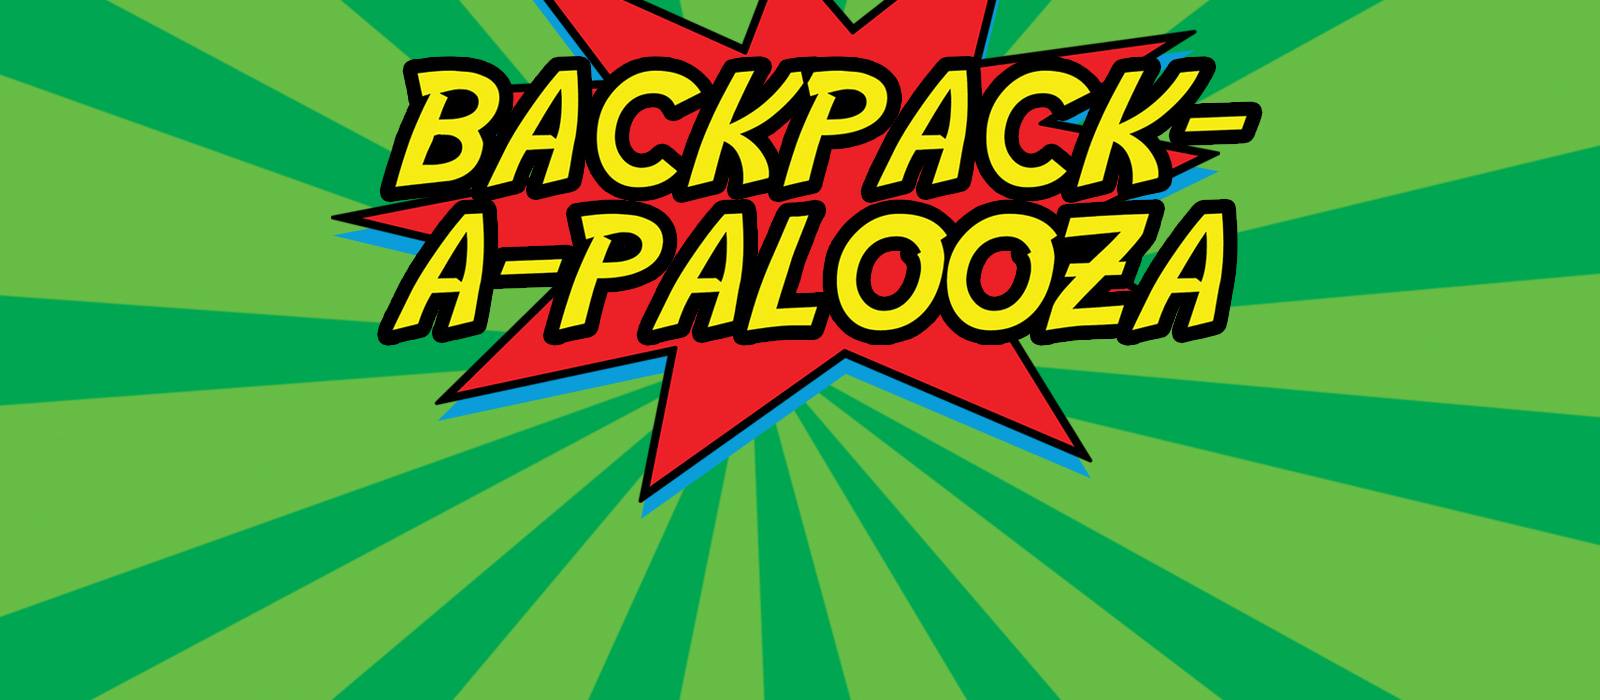 Backpack-a-Palooza